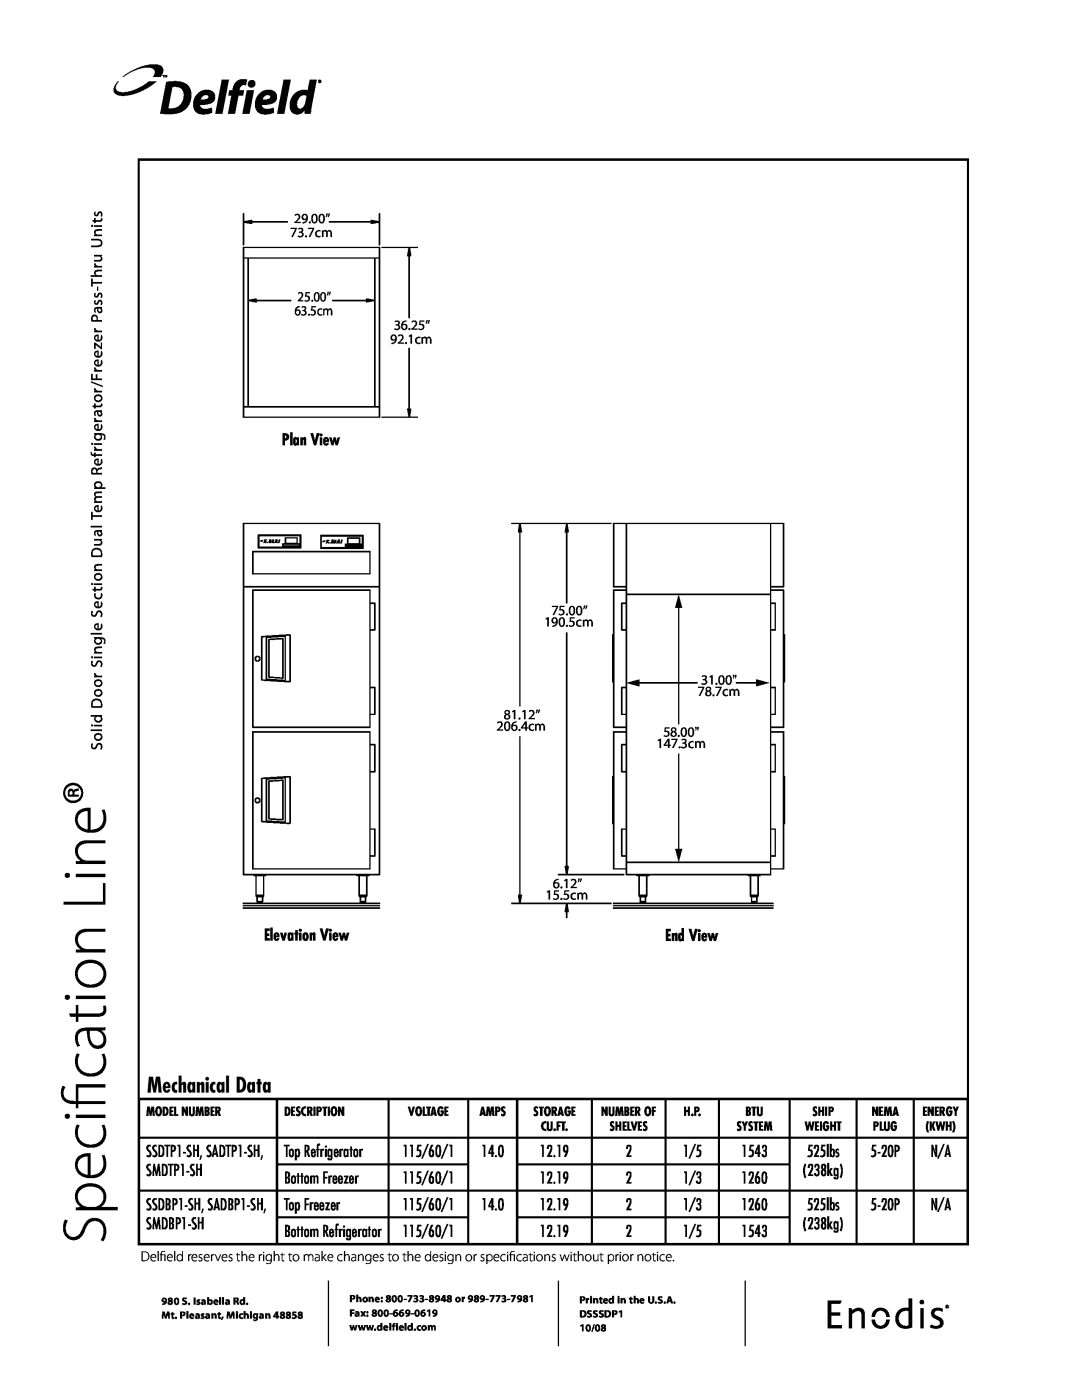 Delfield SMDTP1 Specification, Delfield, Mechanical Data, Refrigerator/Freezer Pass-Thru Units, Plan View Elevation View 